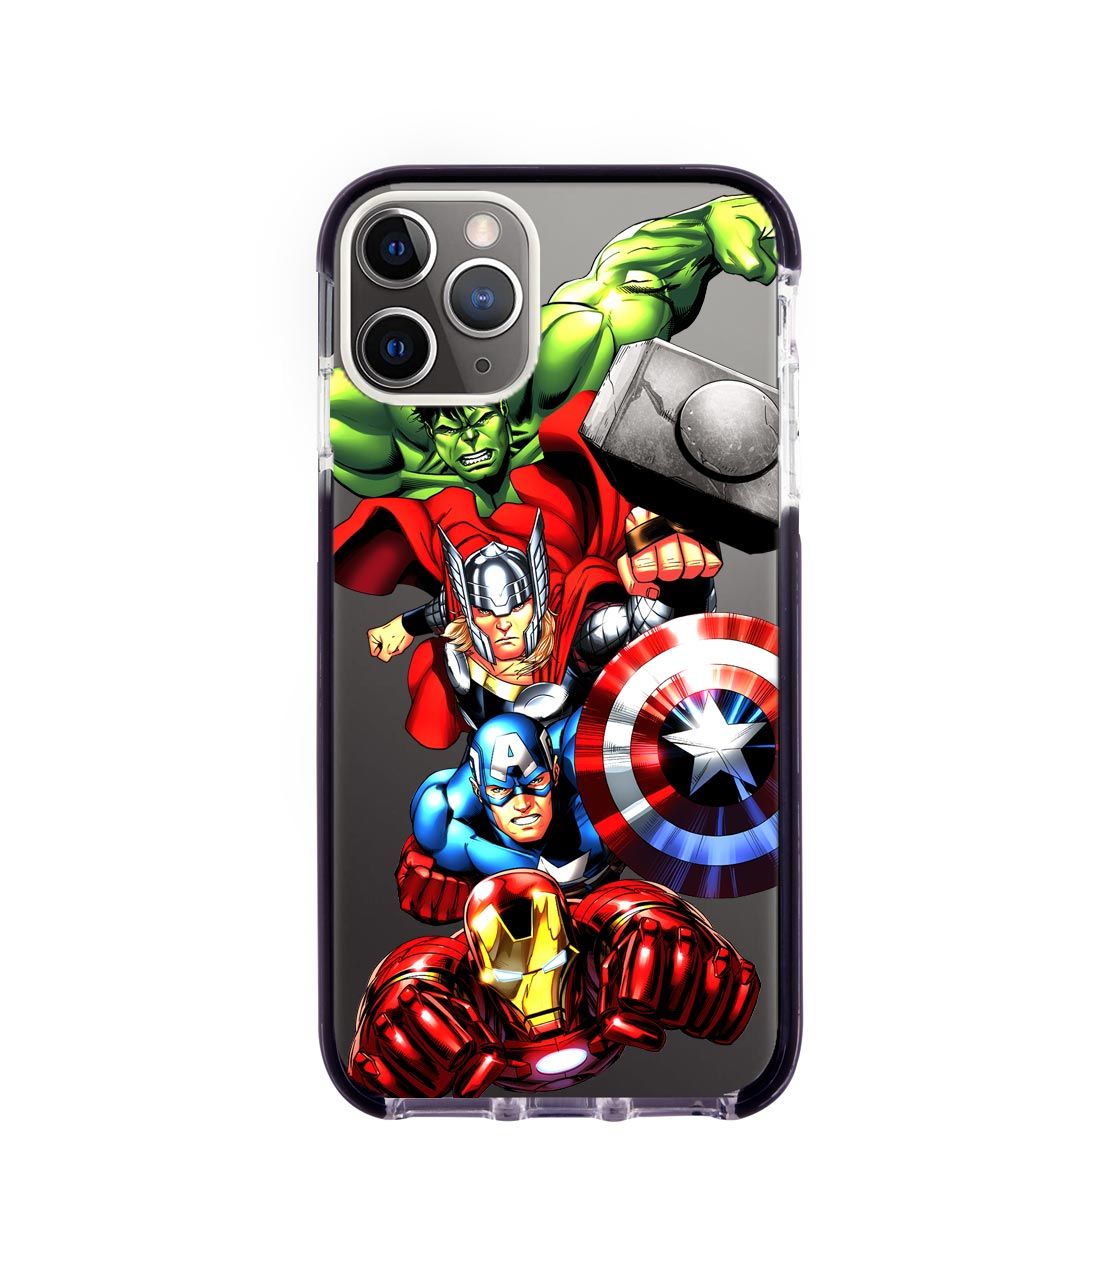 Avengers Fury - Extreme Phone Case for iPhone 11 Pro